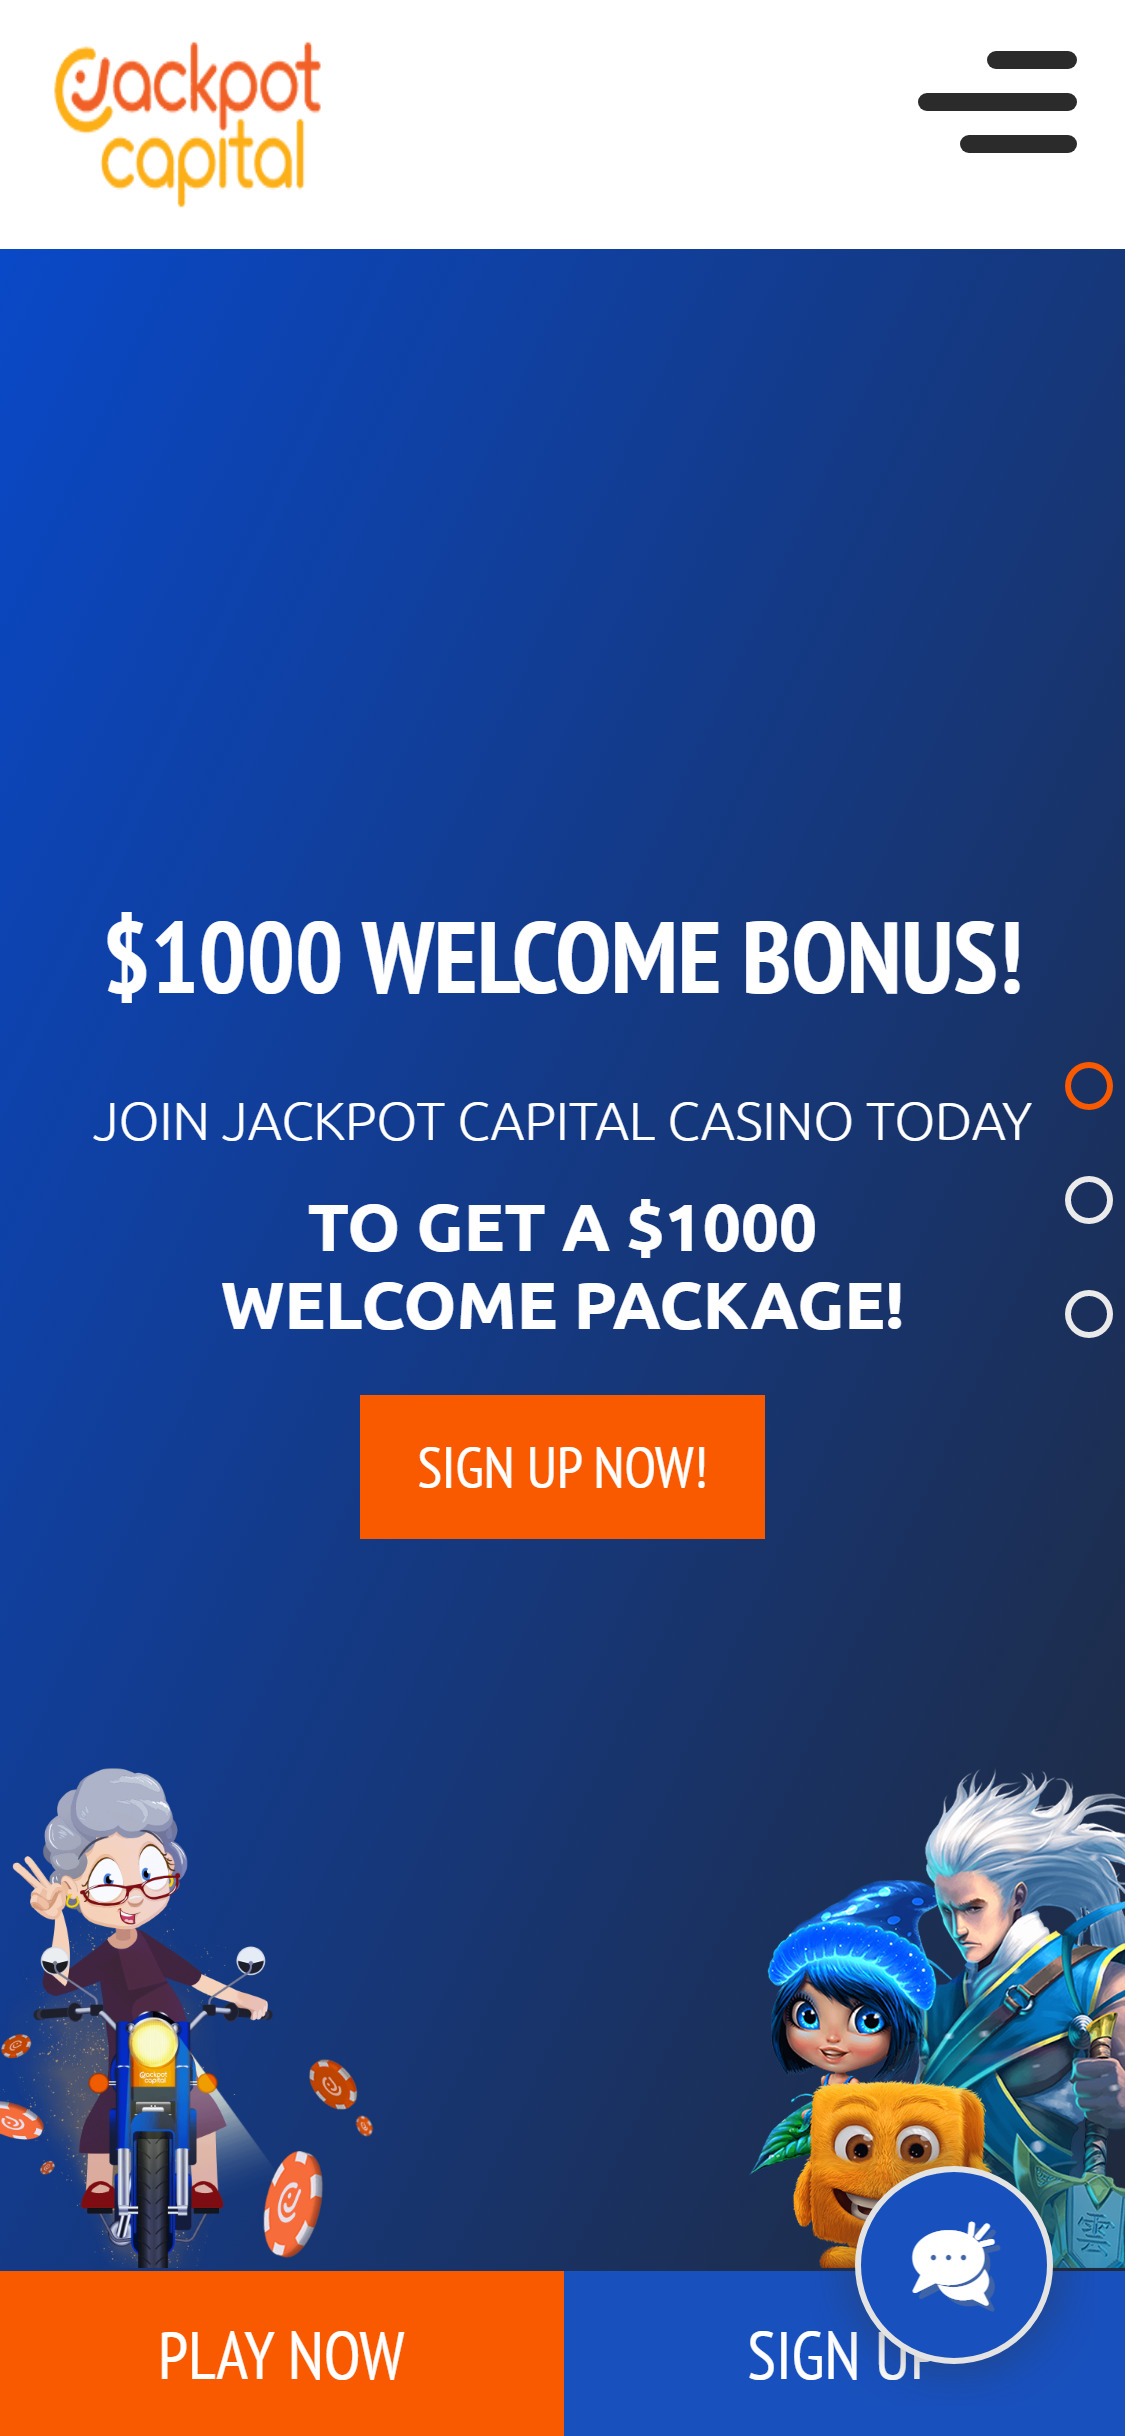 Jackpot Capital Casino Mobile Review